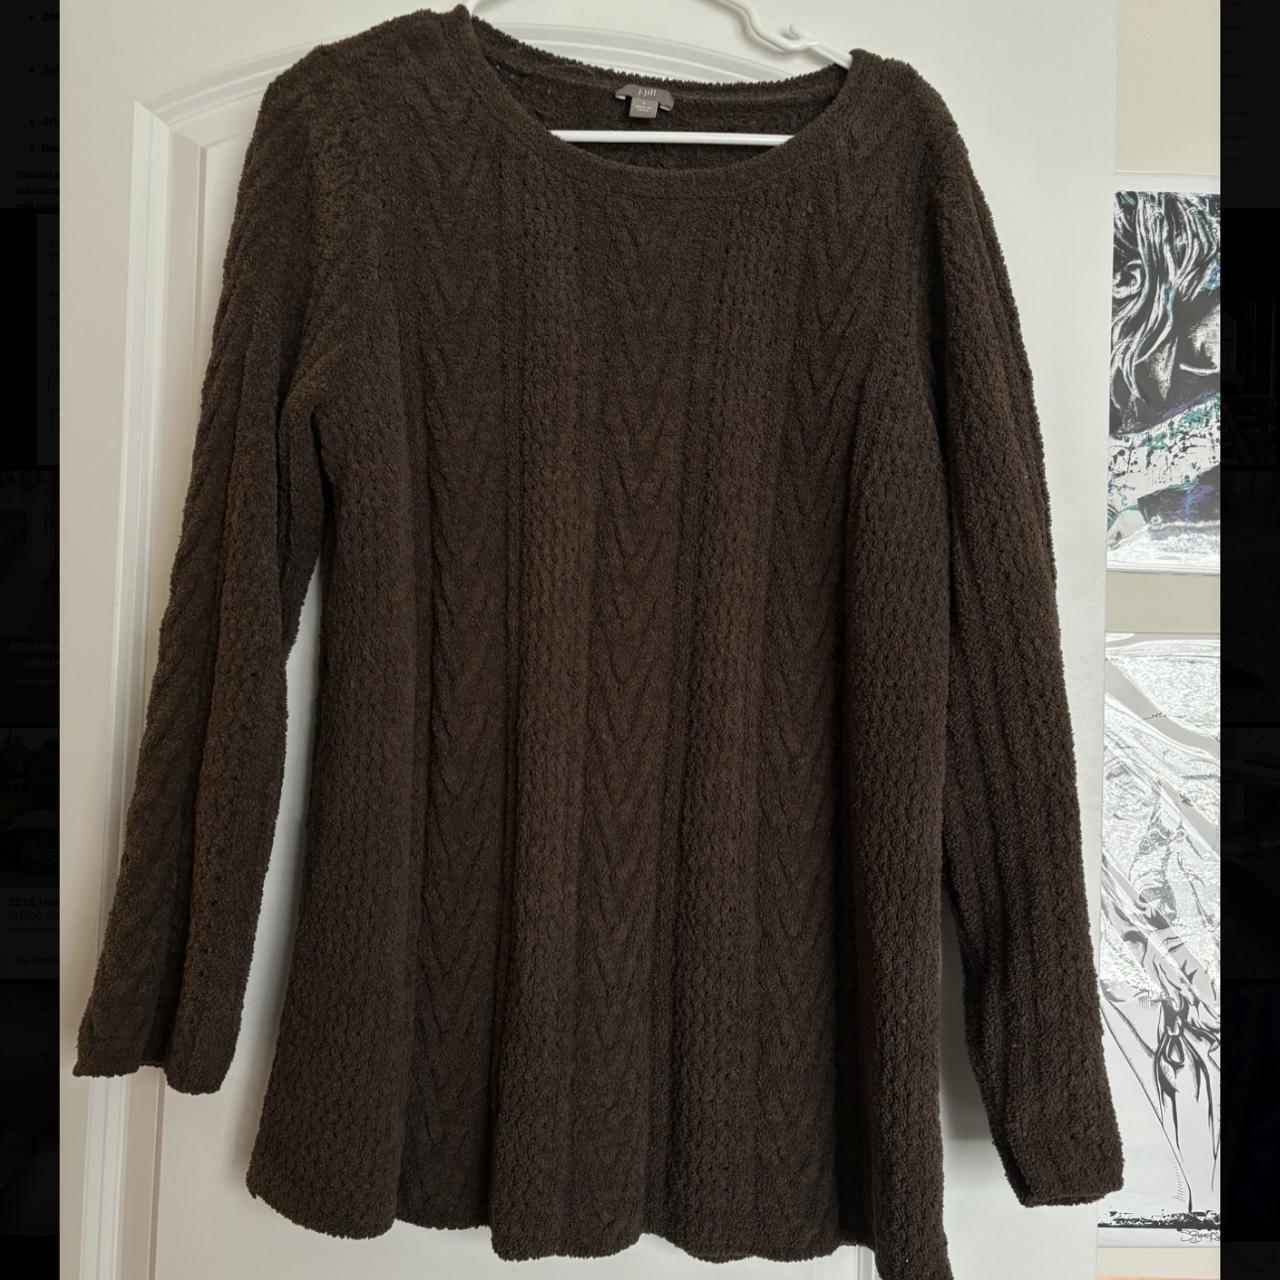 very cute and flowy vintage sweater - Depop